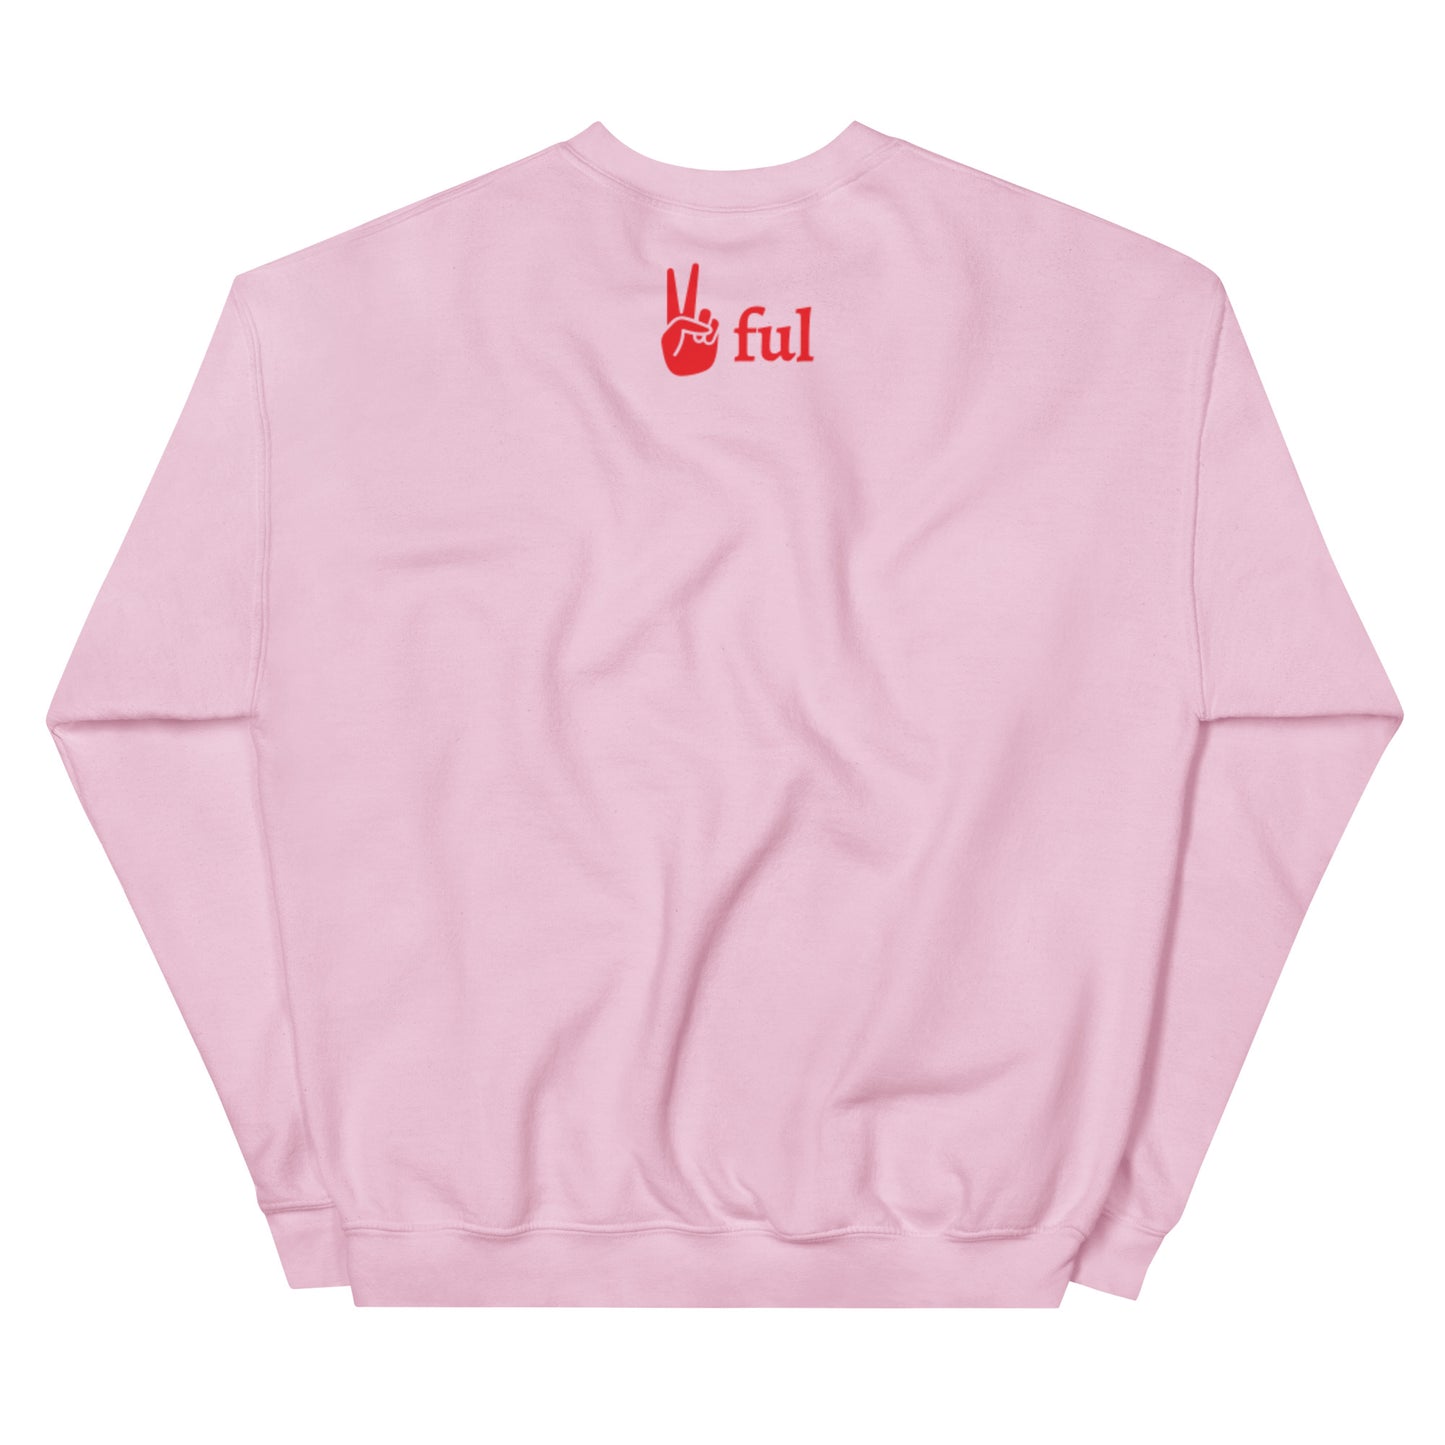 Unisex Love Sweatshirt